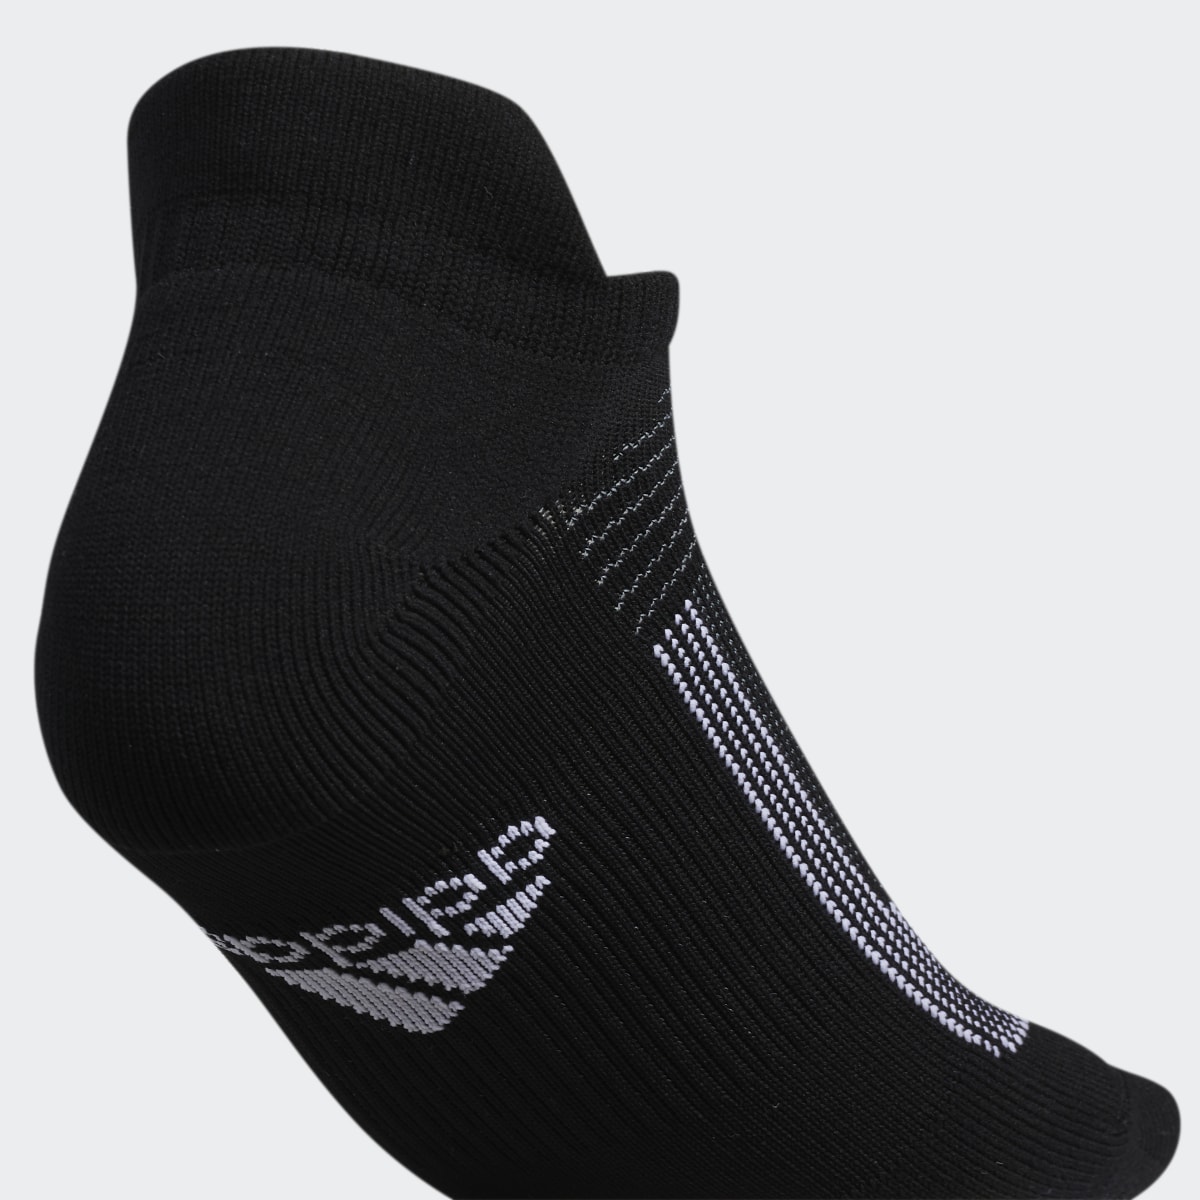 Adidas Superlite Ultraboost Tabbed No-Show Socks 2 Pairs. 5